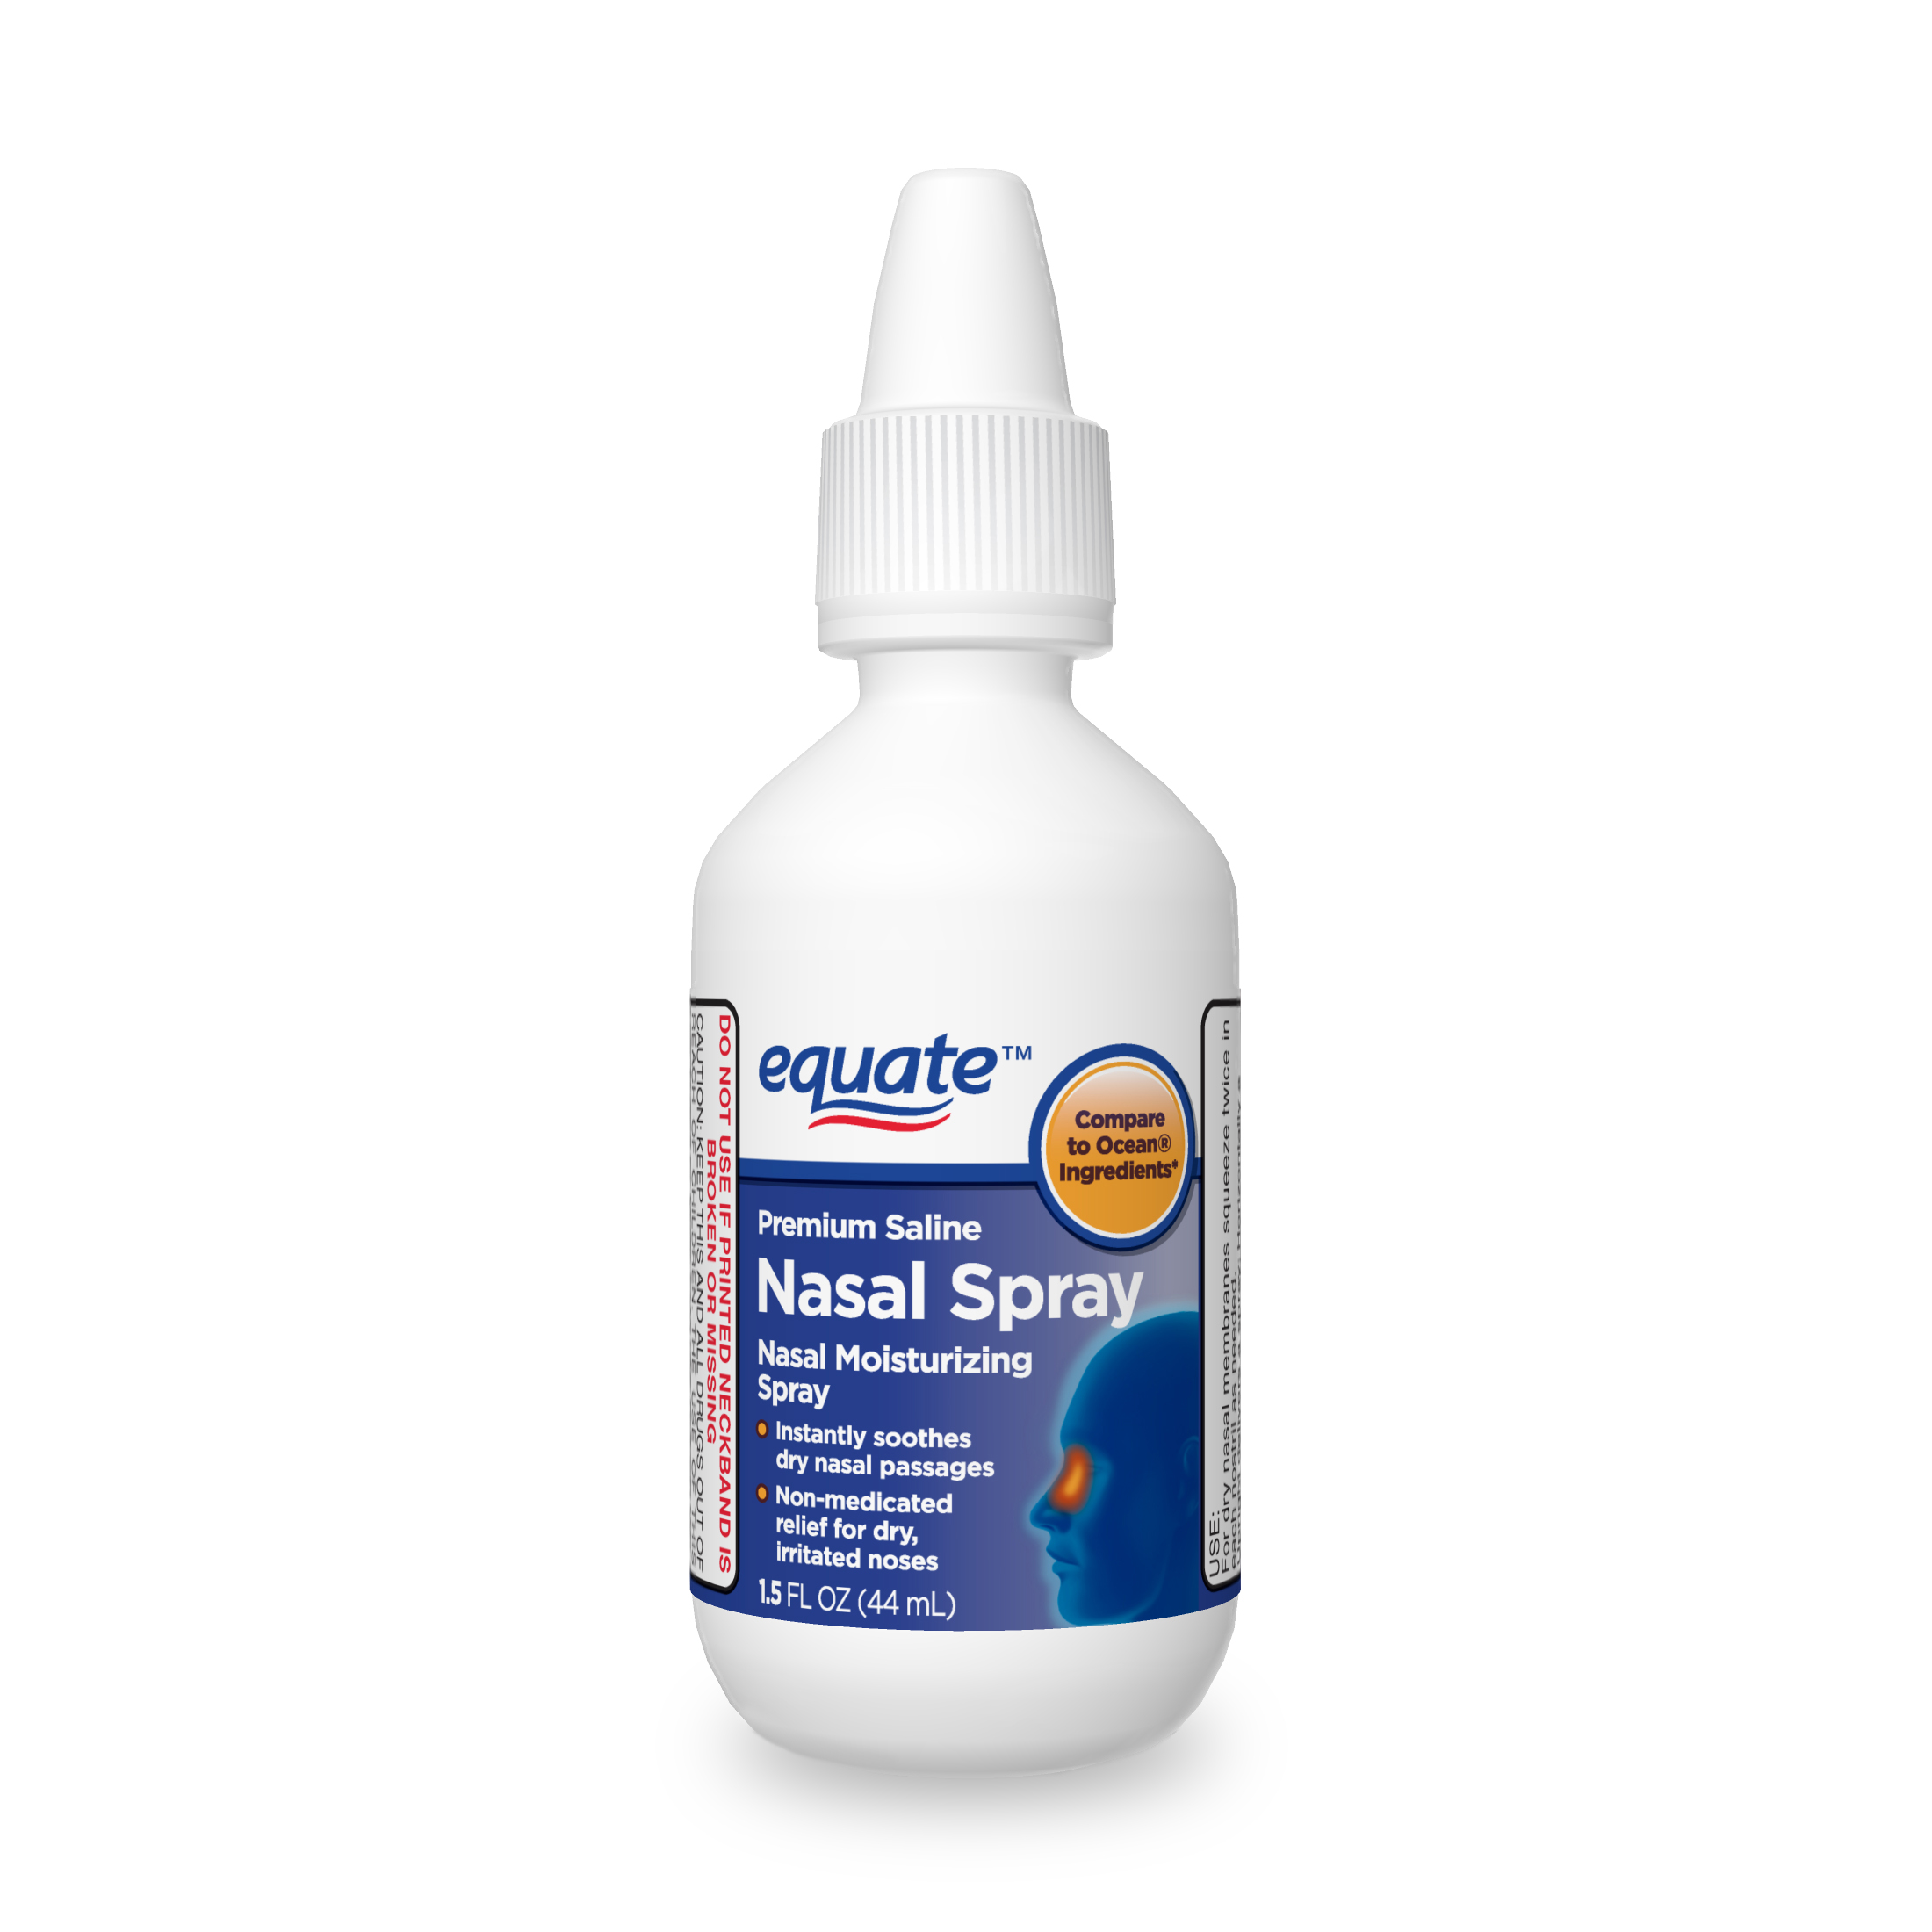 Equate Premium Saline Nasal Moisturizing Spray, 1.5 fl oz - image 1 of 6